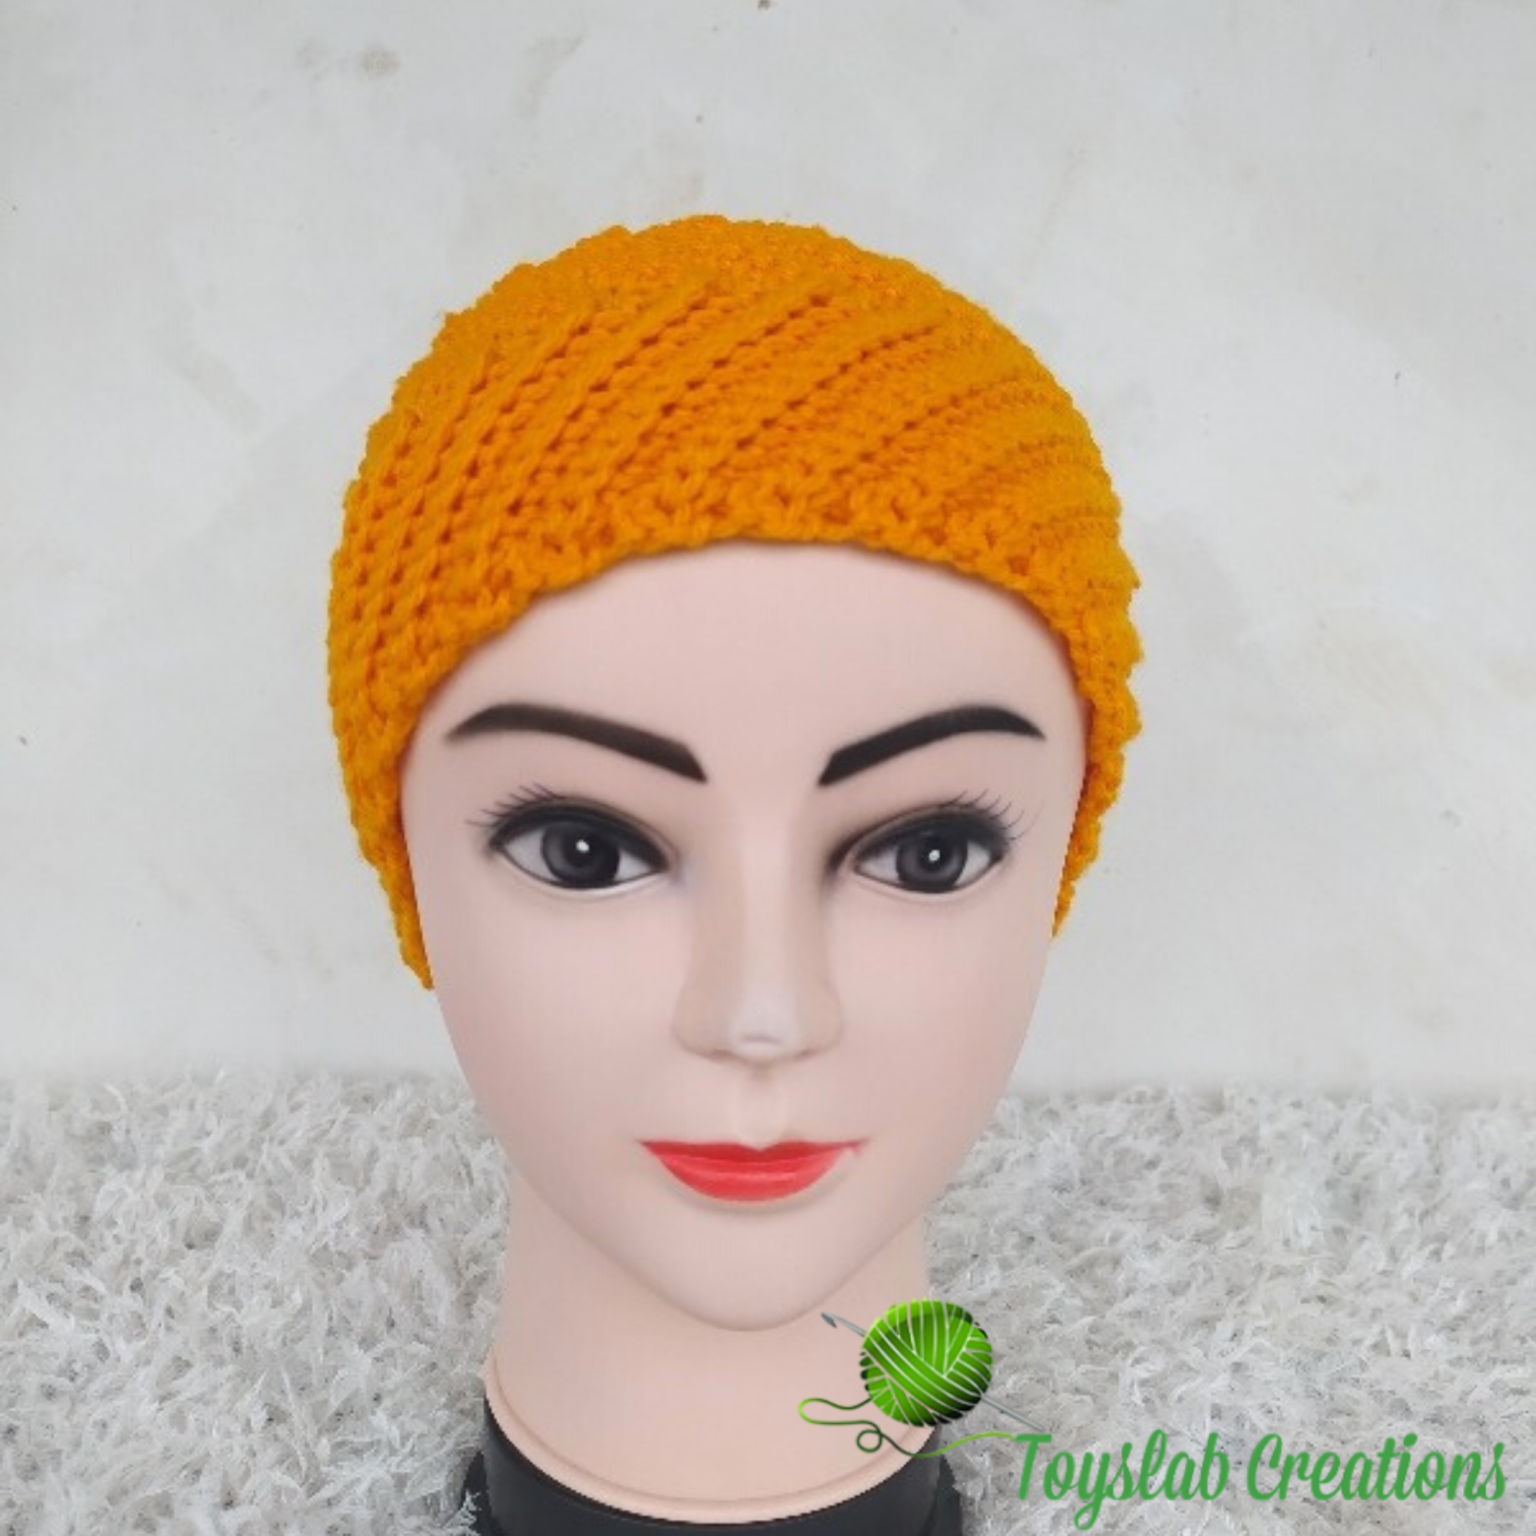 Crochet chevron headband toyslab creations